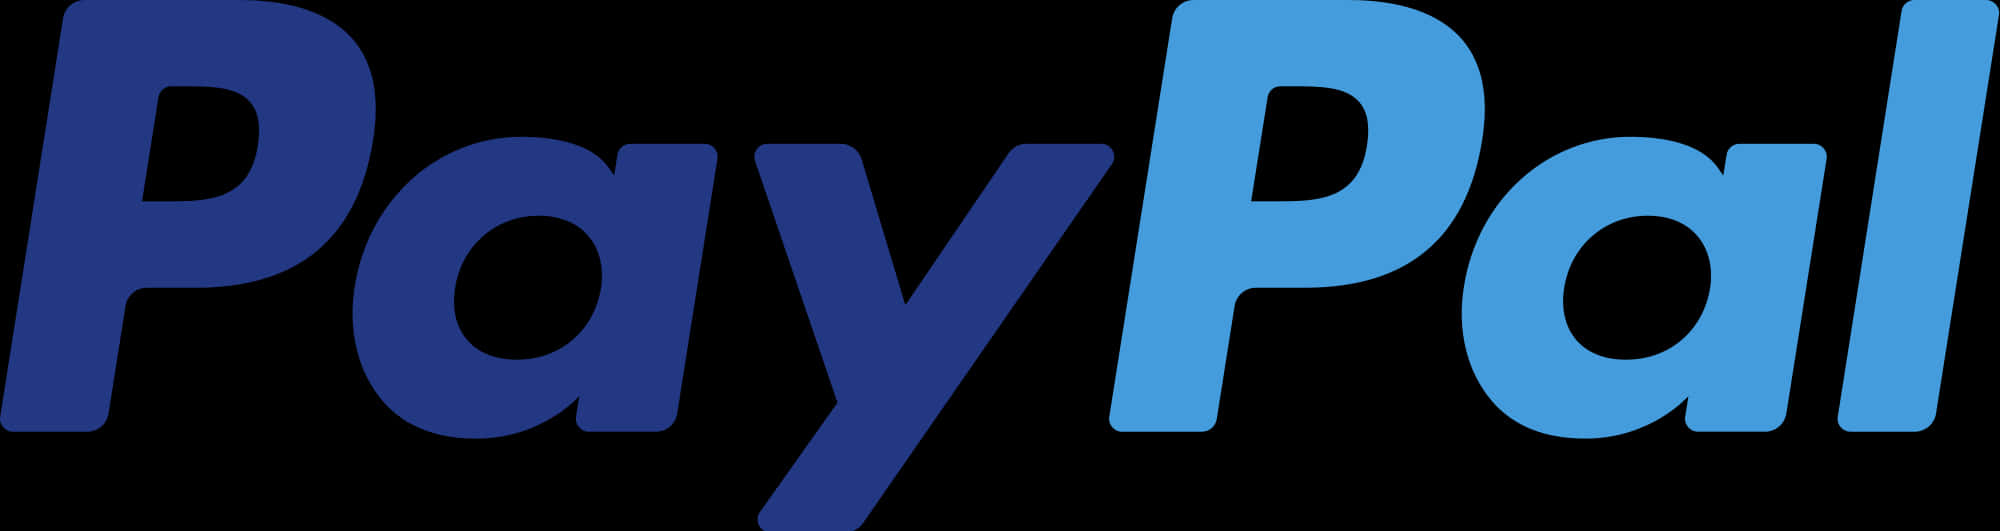 Paypal Logo Edit